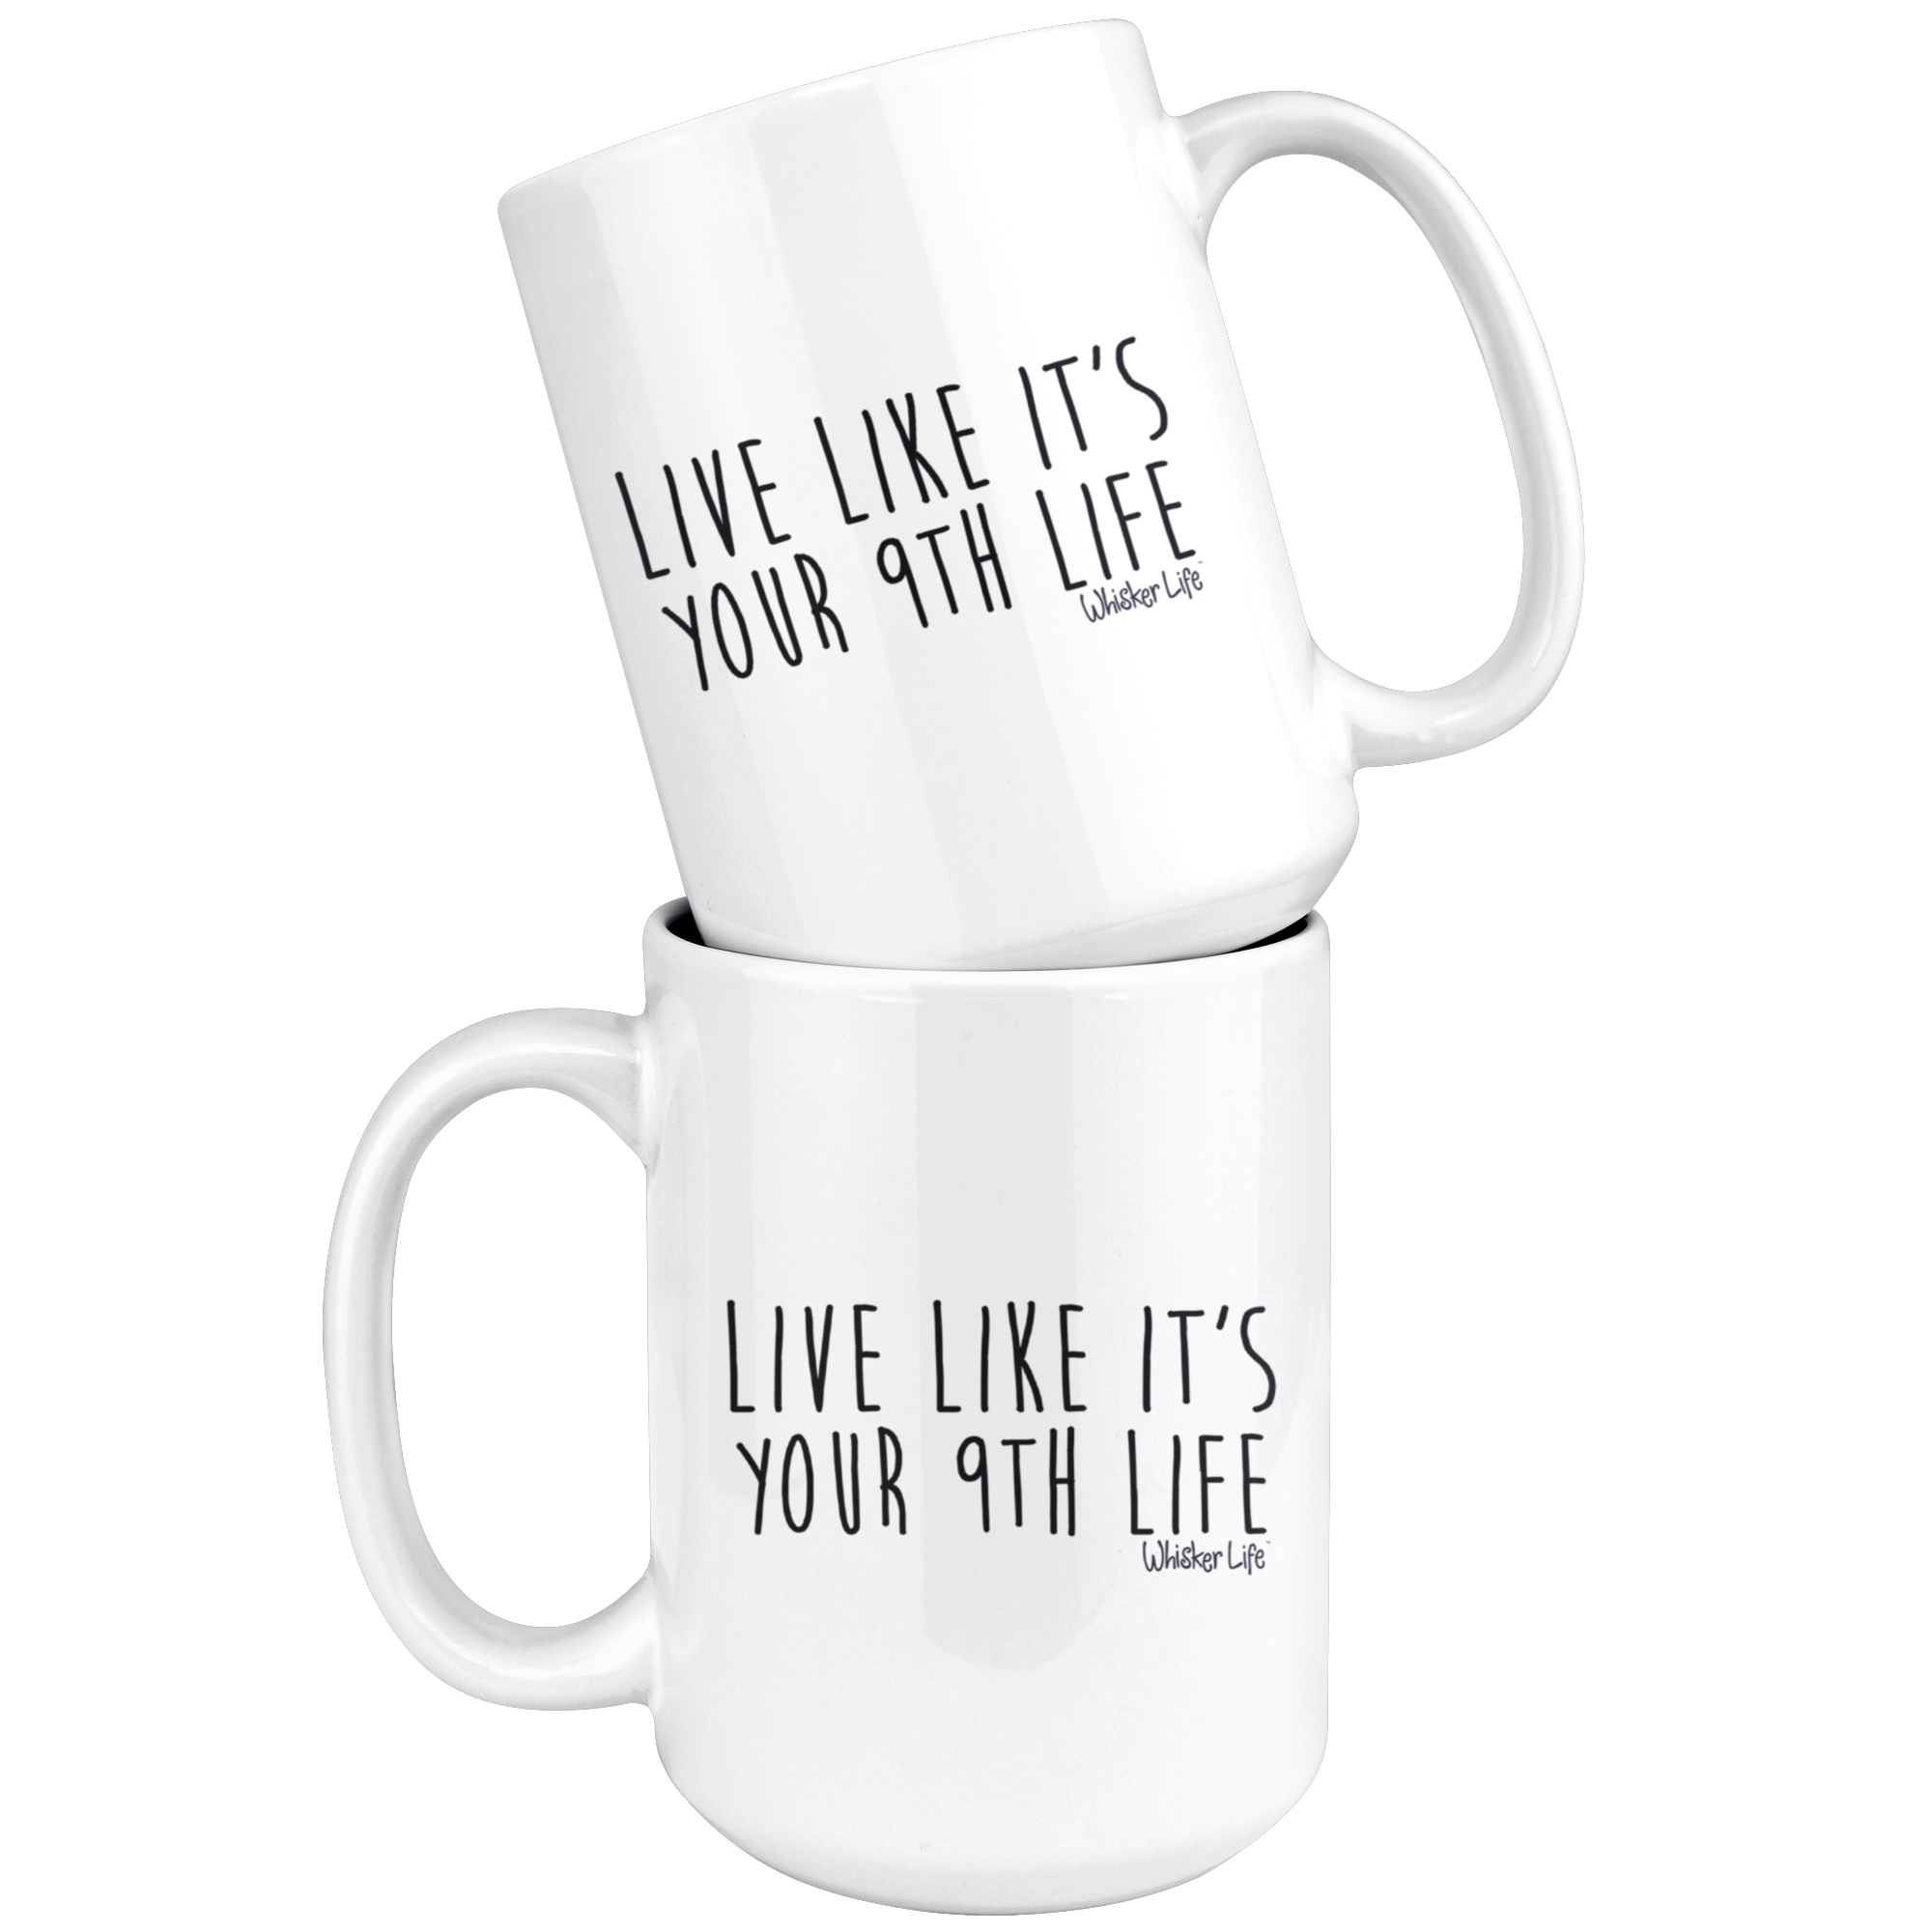 Live Like It's Your 9th Life - Large 15oz Coffee Mug